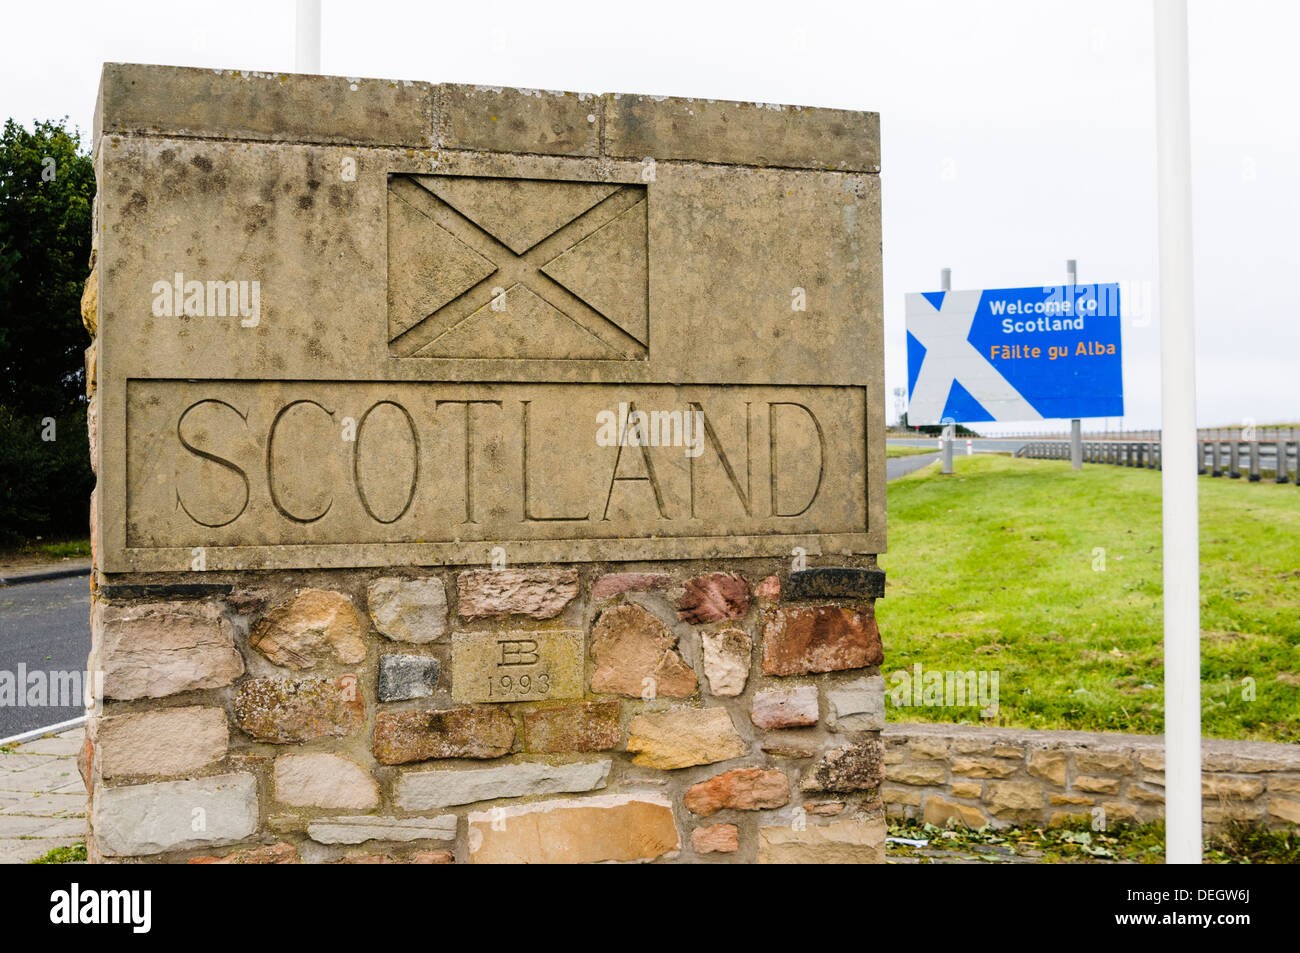 Scotland/England border on the A1 Stock Photo